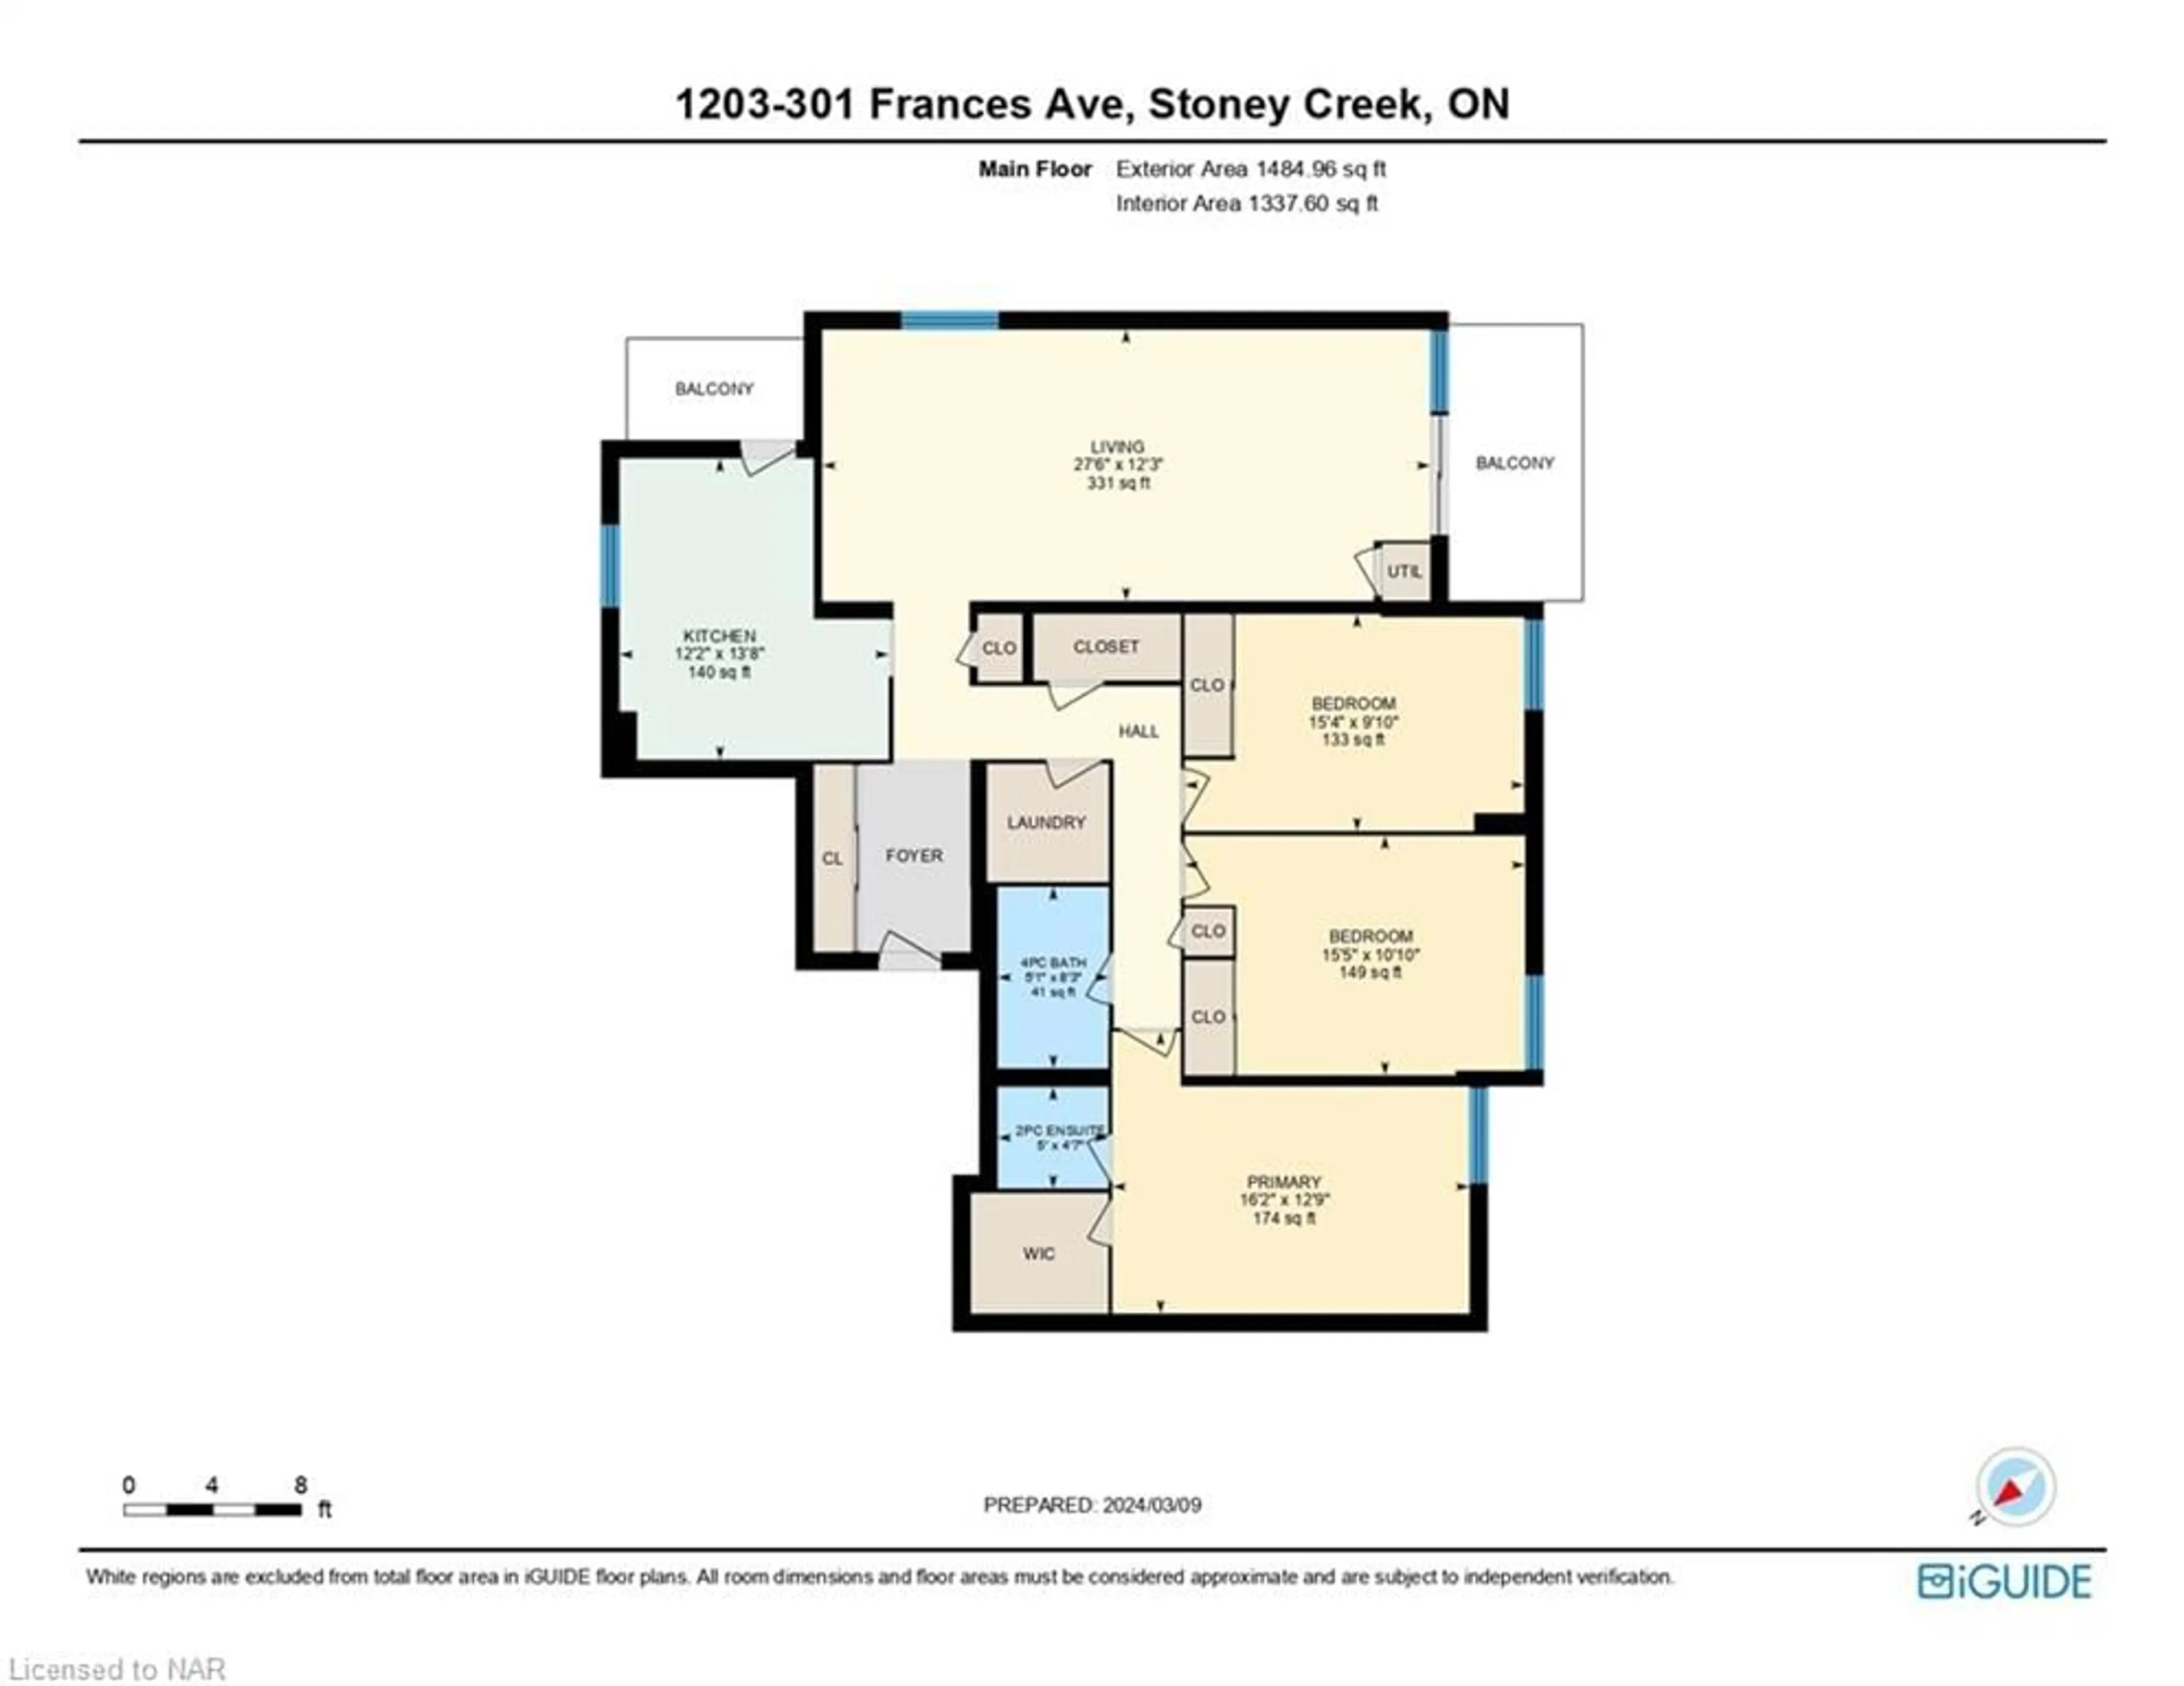 Floor plan for 301 Frances Ave #1203, Stoney Creek Ontario L8E 3W6